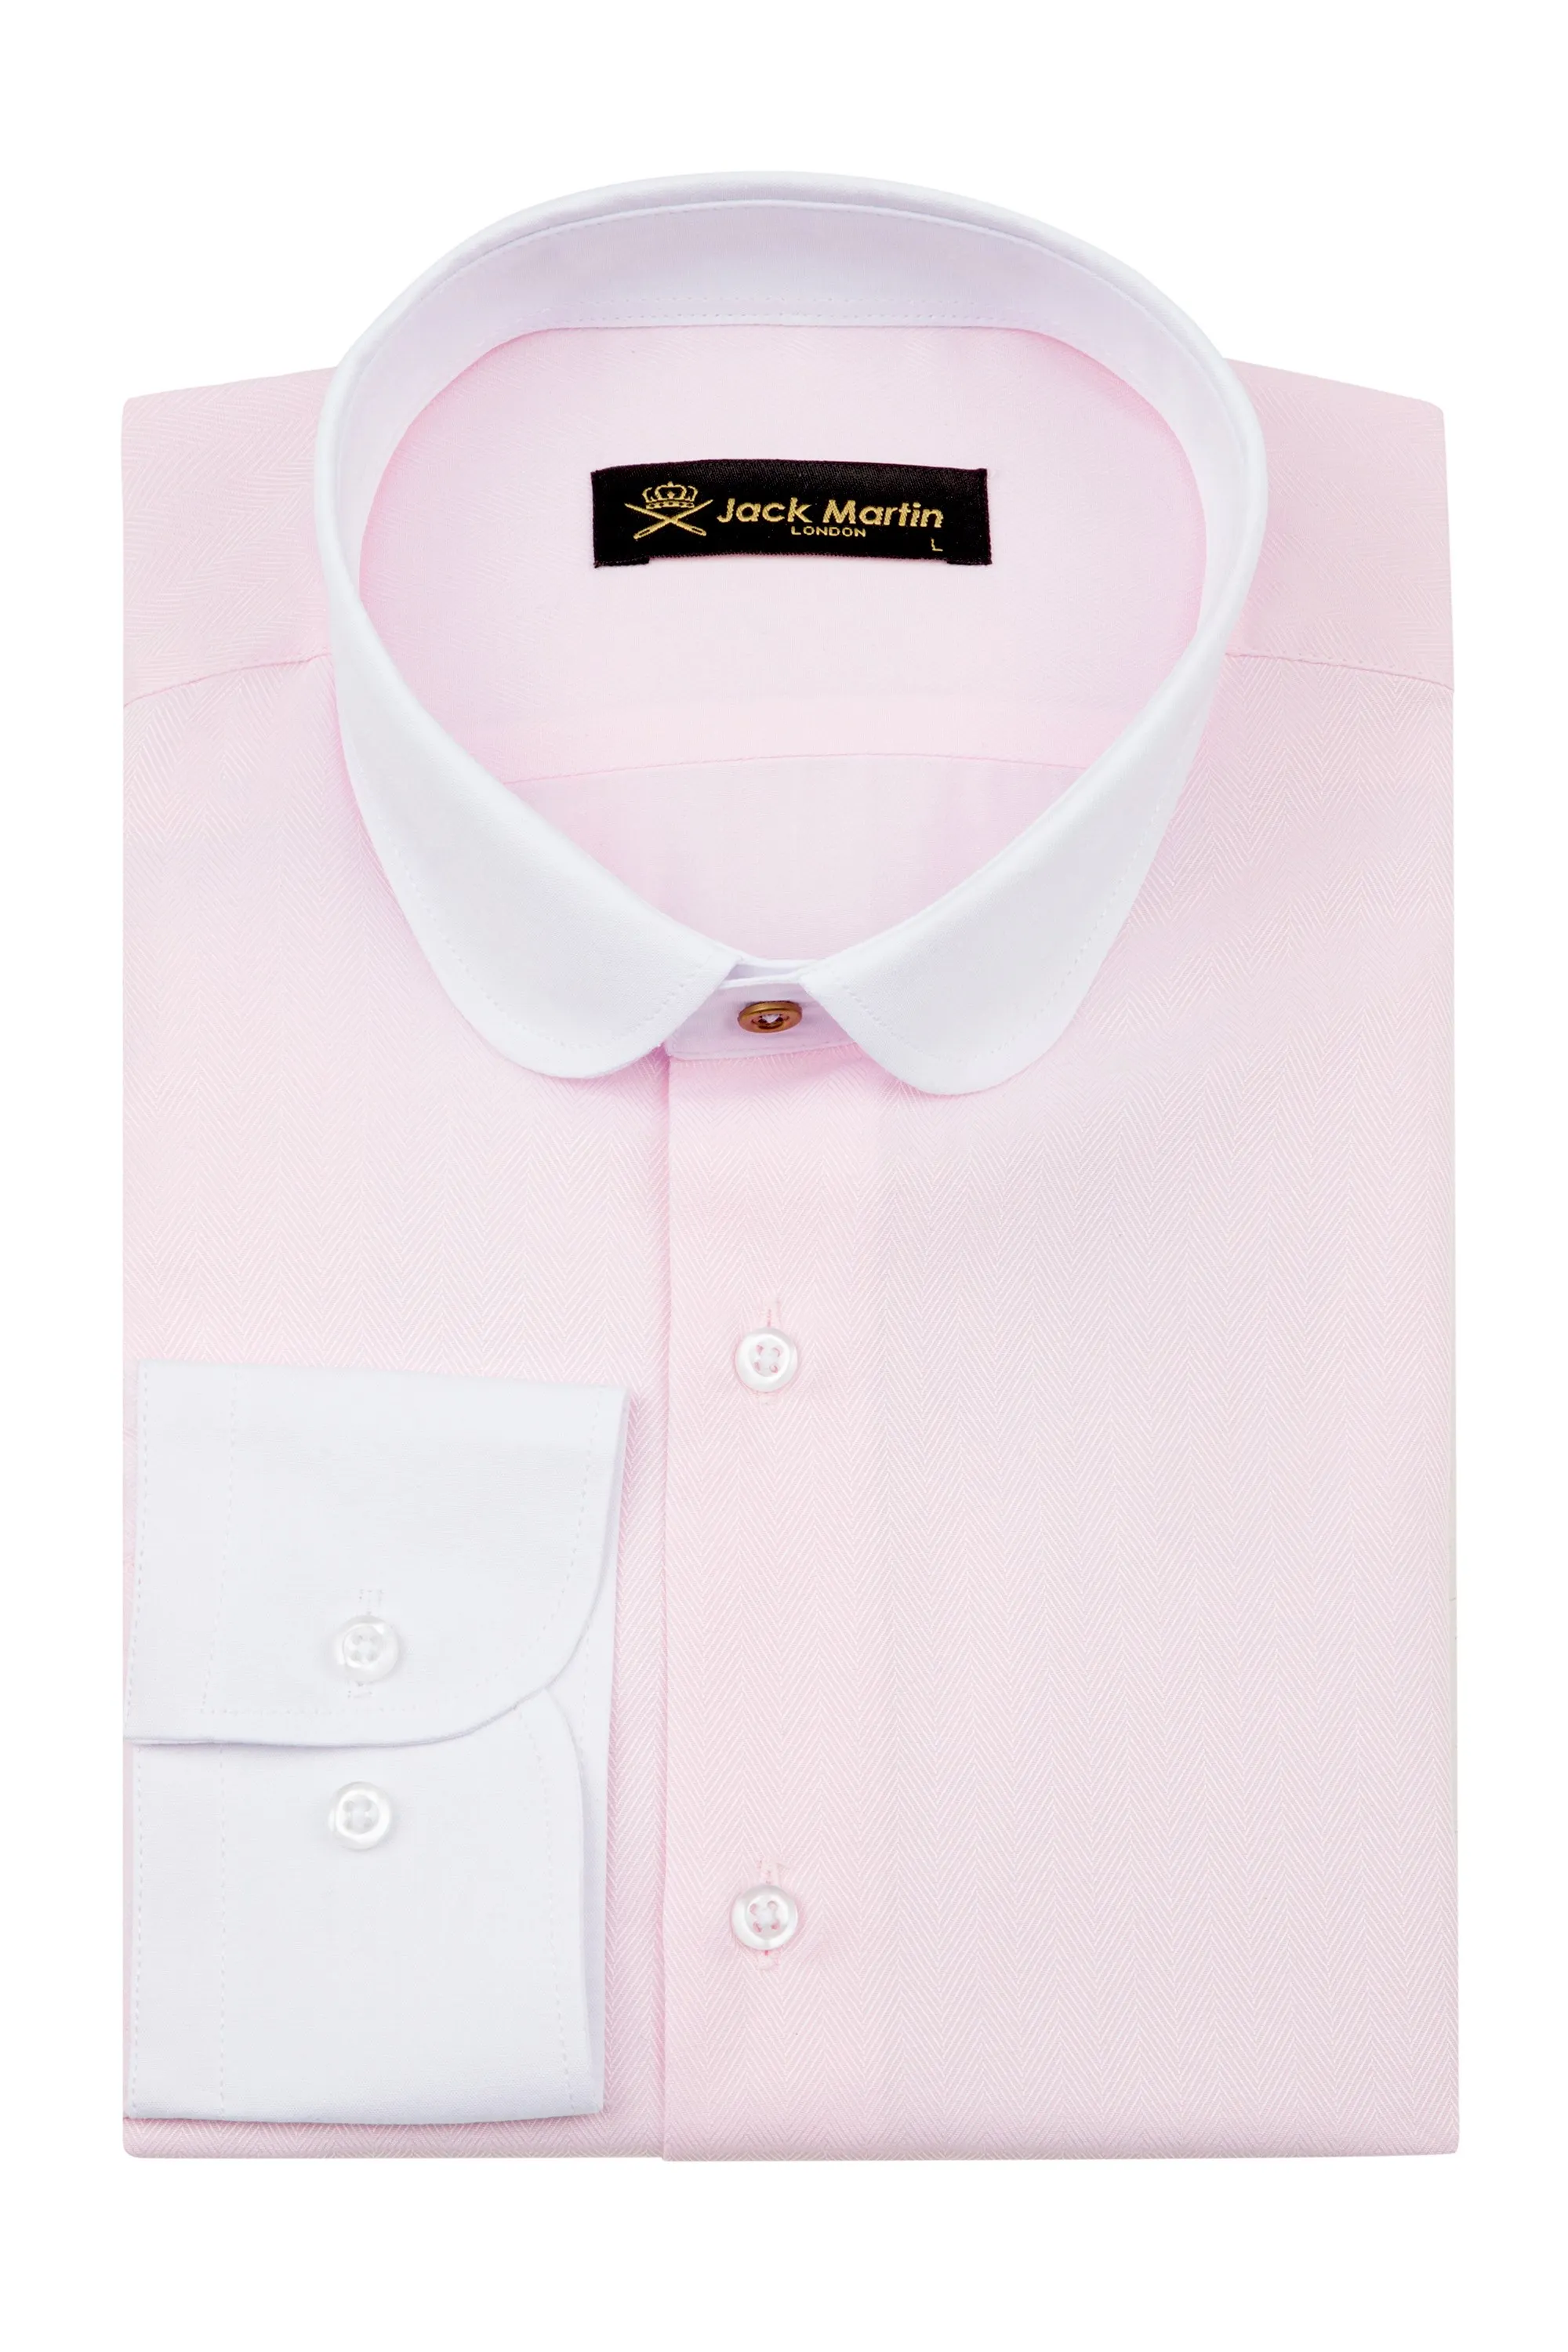 Jack Martin Peaky Blinders Style White Herringbone Slim Fit Shirt